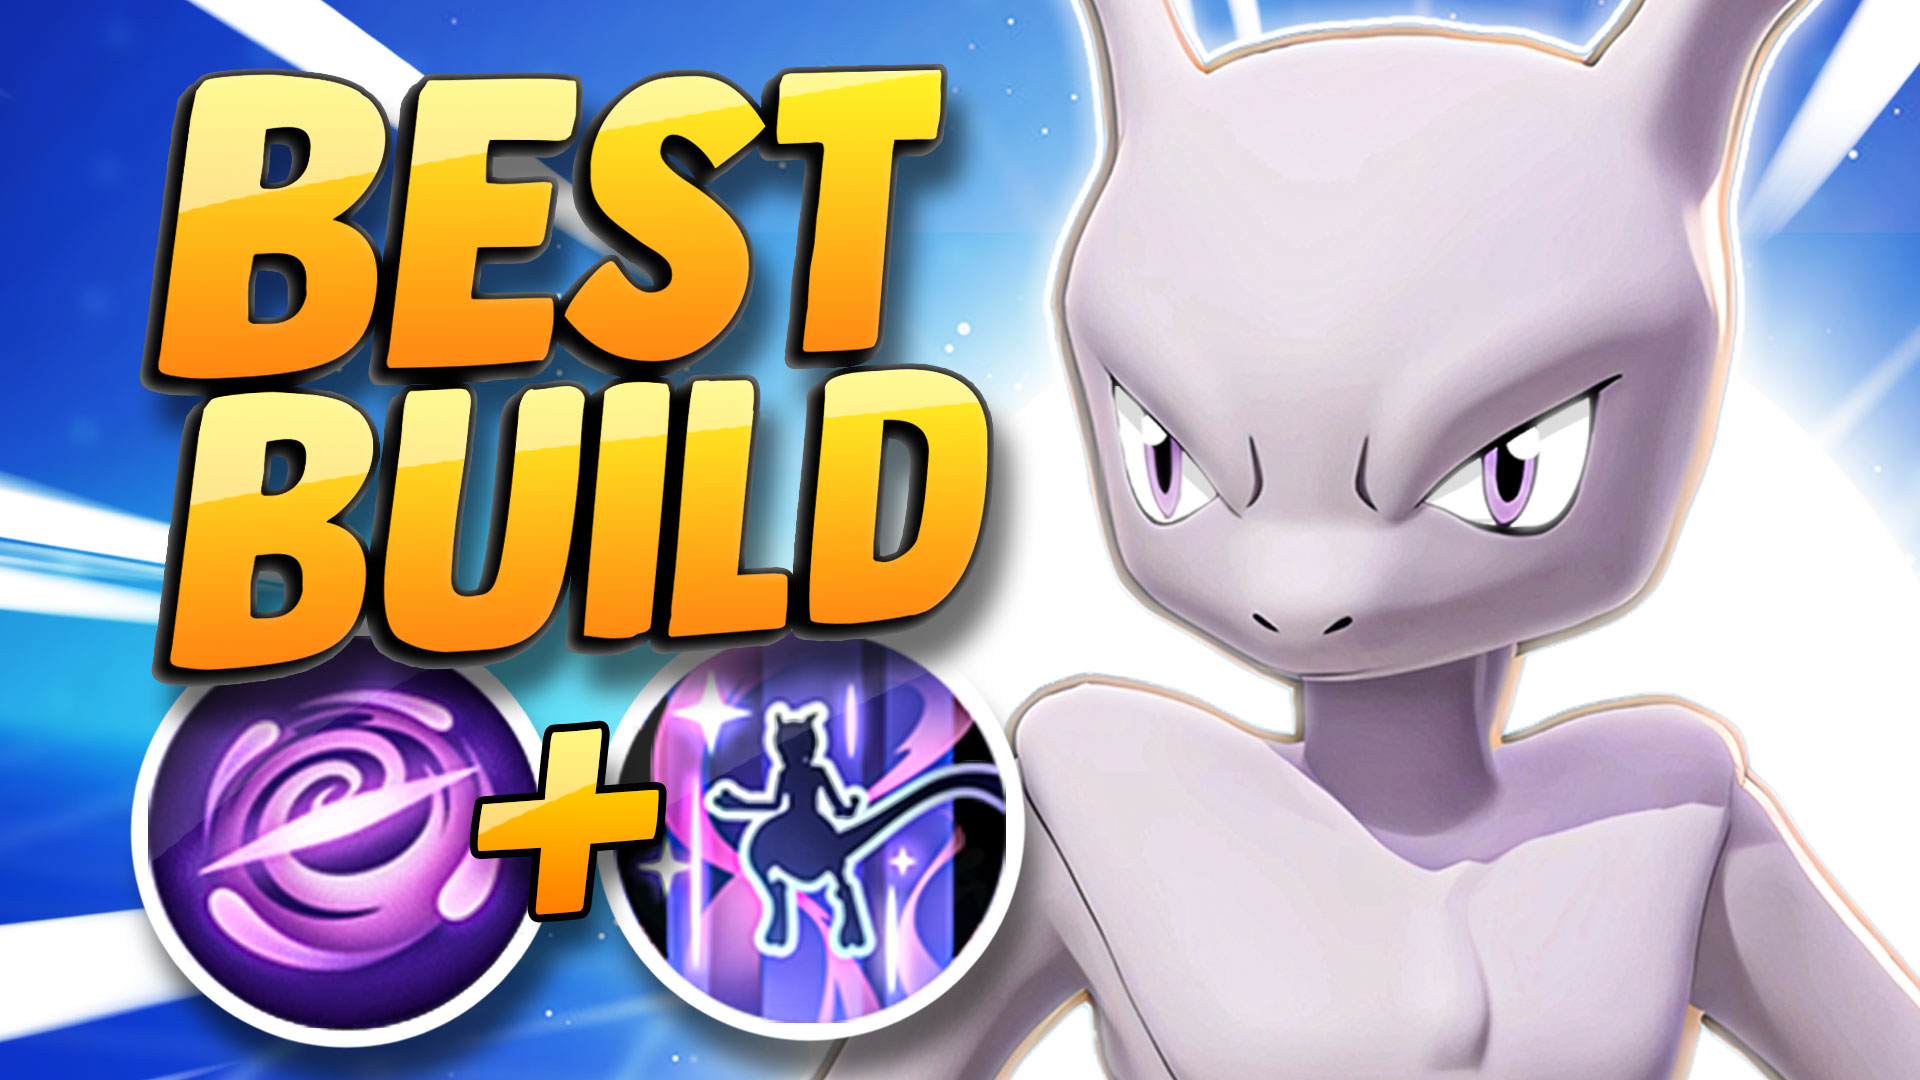 Best Mewtwo X Builds In Pokemon Unite